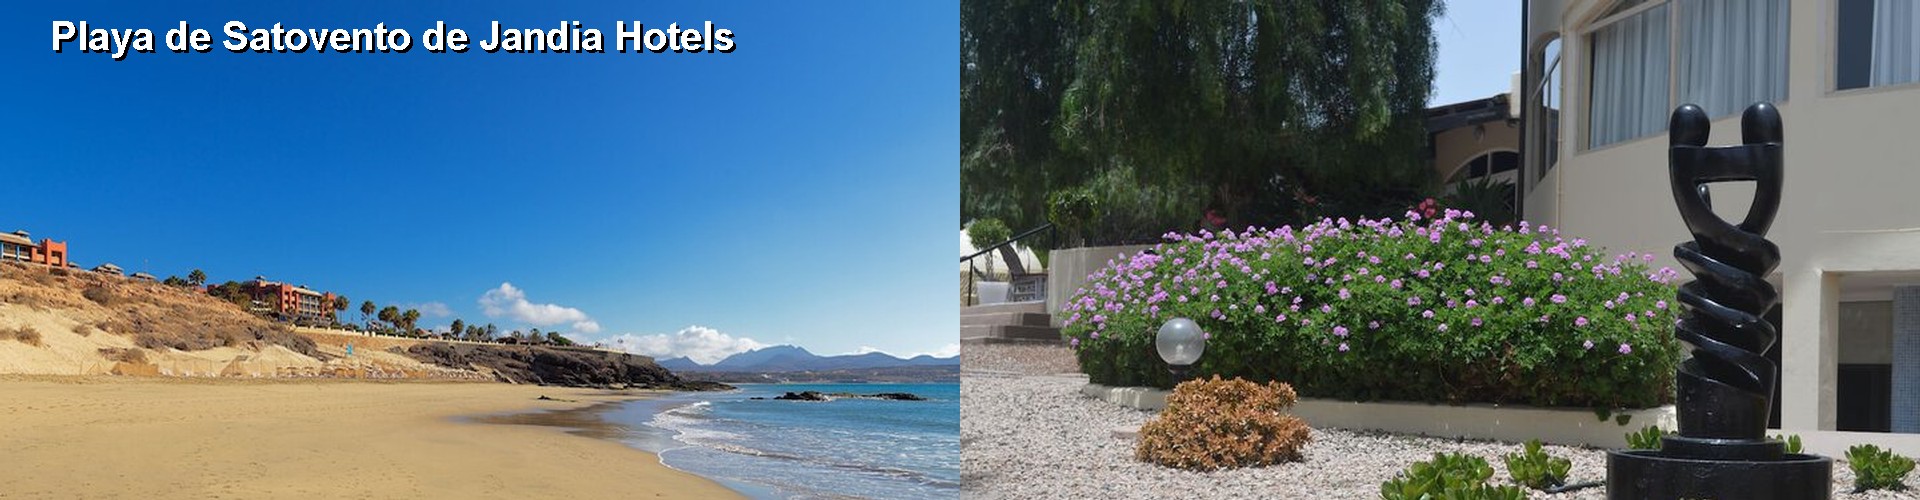 5 Best Hotels near Playa de Satovento de Jandia